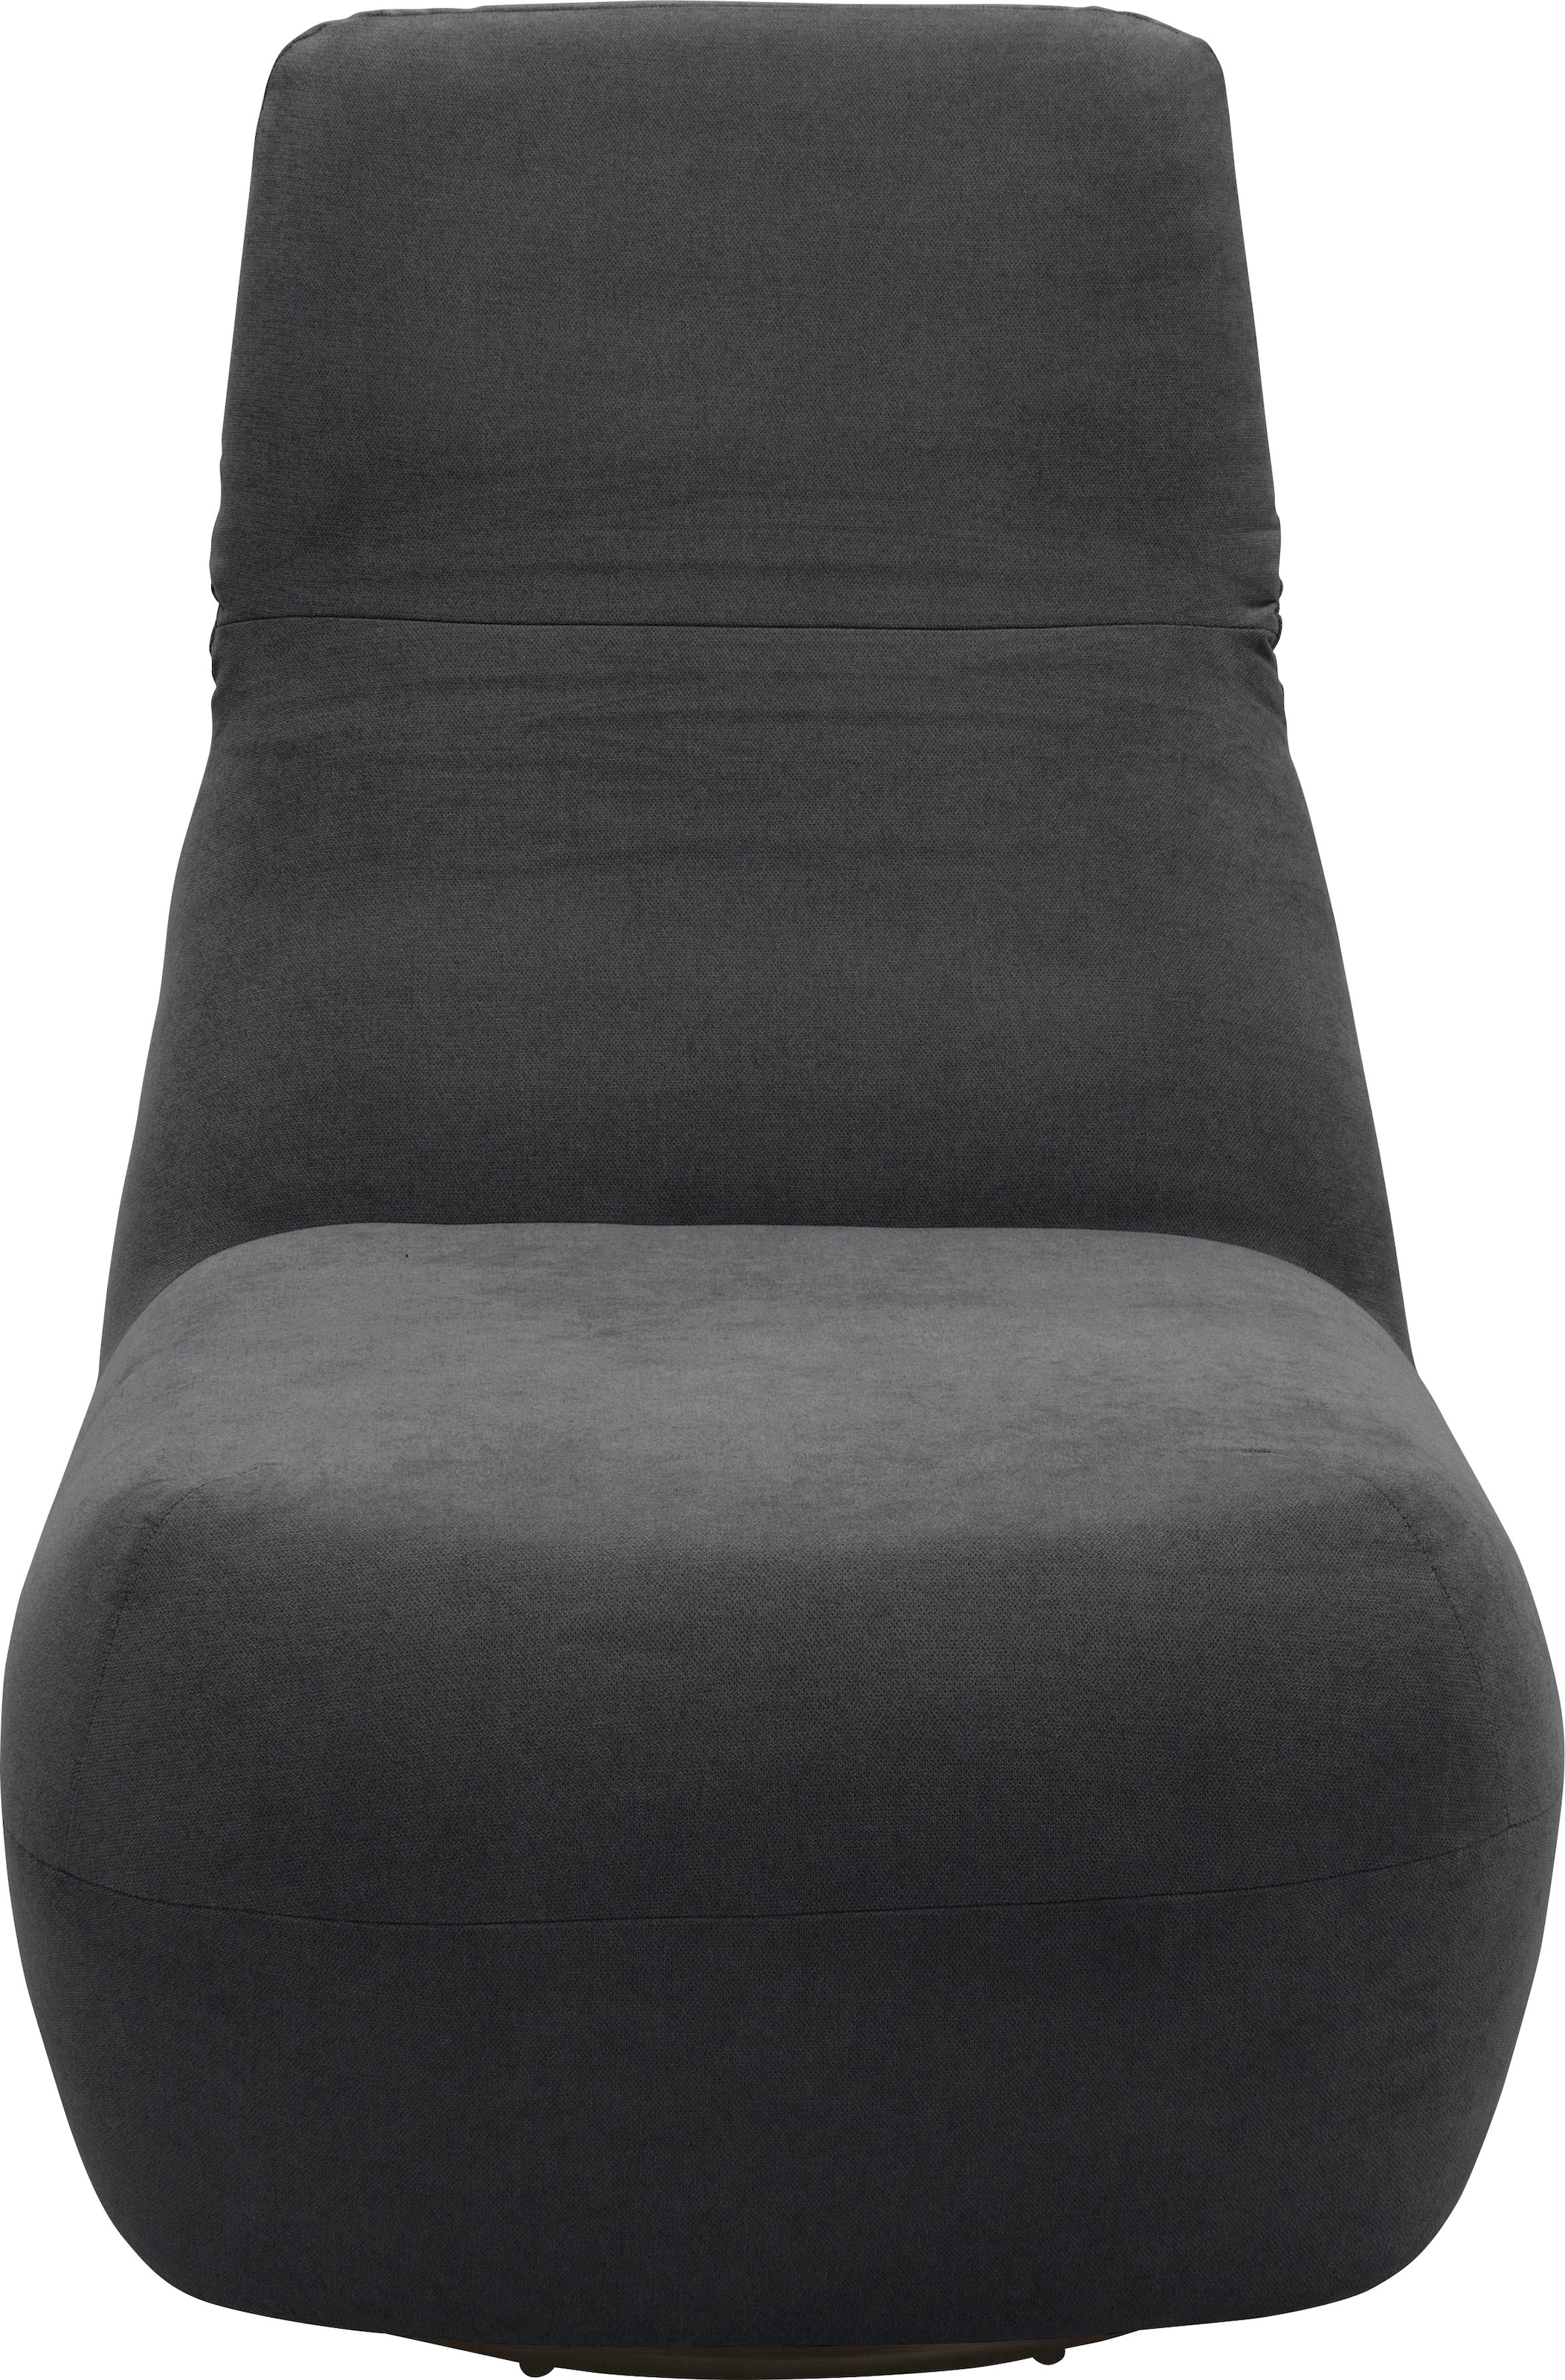 andas Relaxsessel »Emberson Sessel, Rückenlehne hochklappbar, Drehsessel«, Rückenverstellung, Drehfunktion, wahlweise auch Swivel (Wipp) Funktion